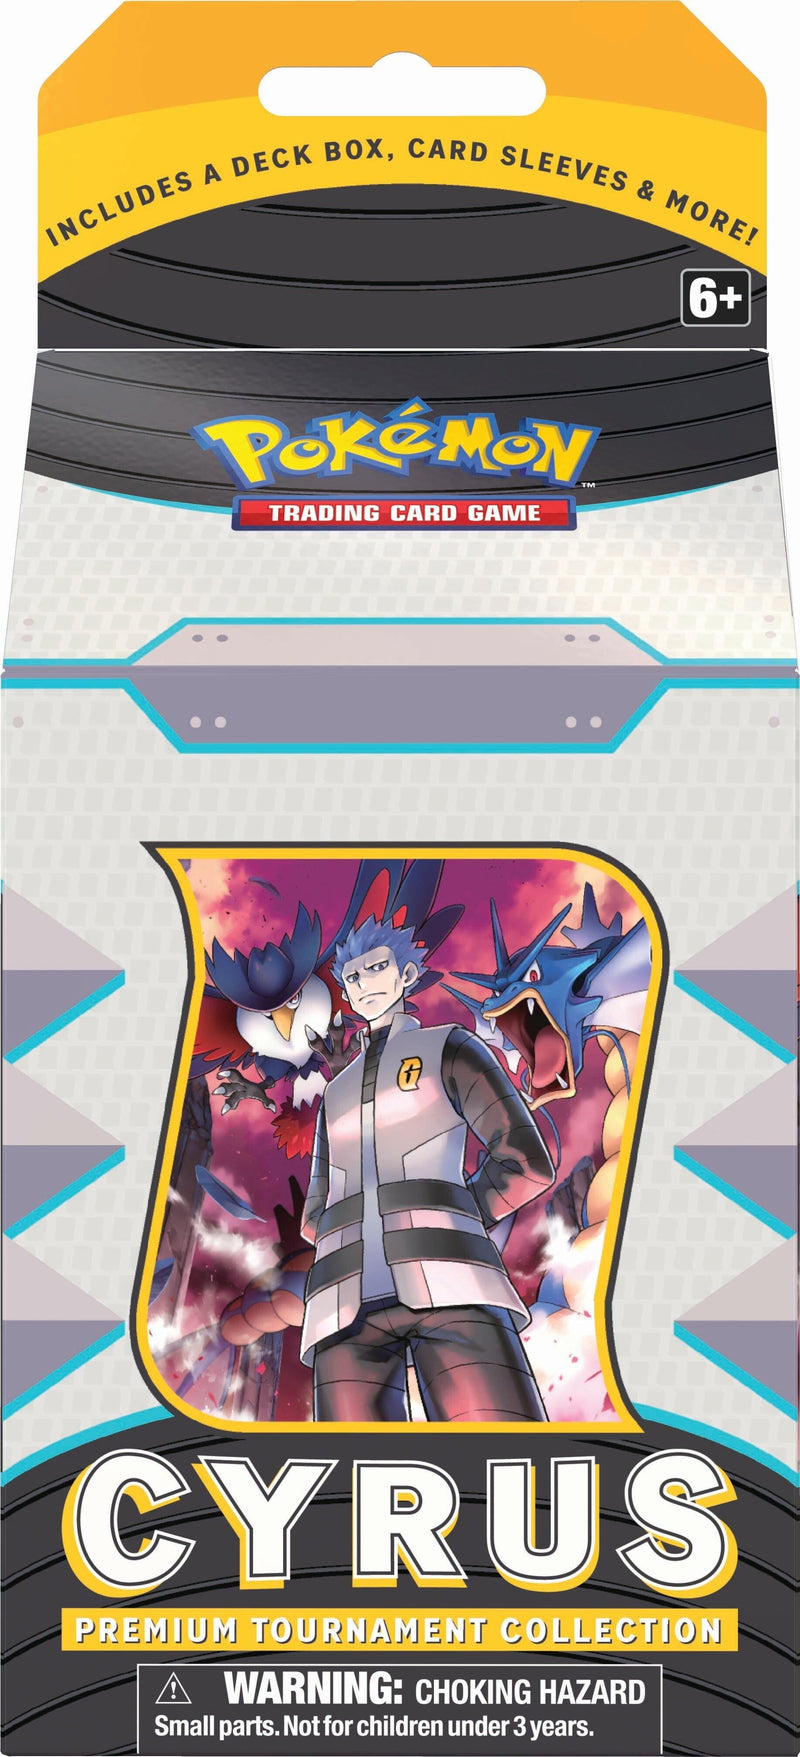 Pokémon TCG: Premium Tournament Collection (Cyrus)